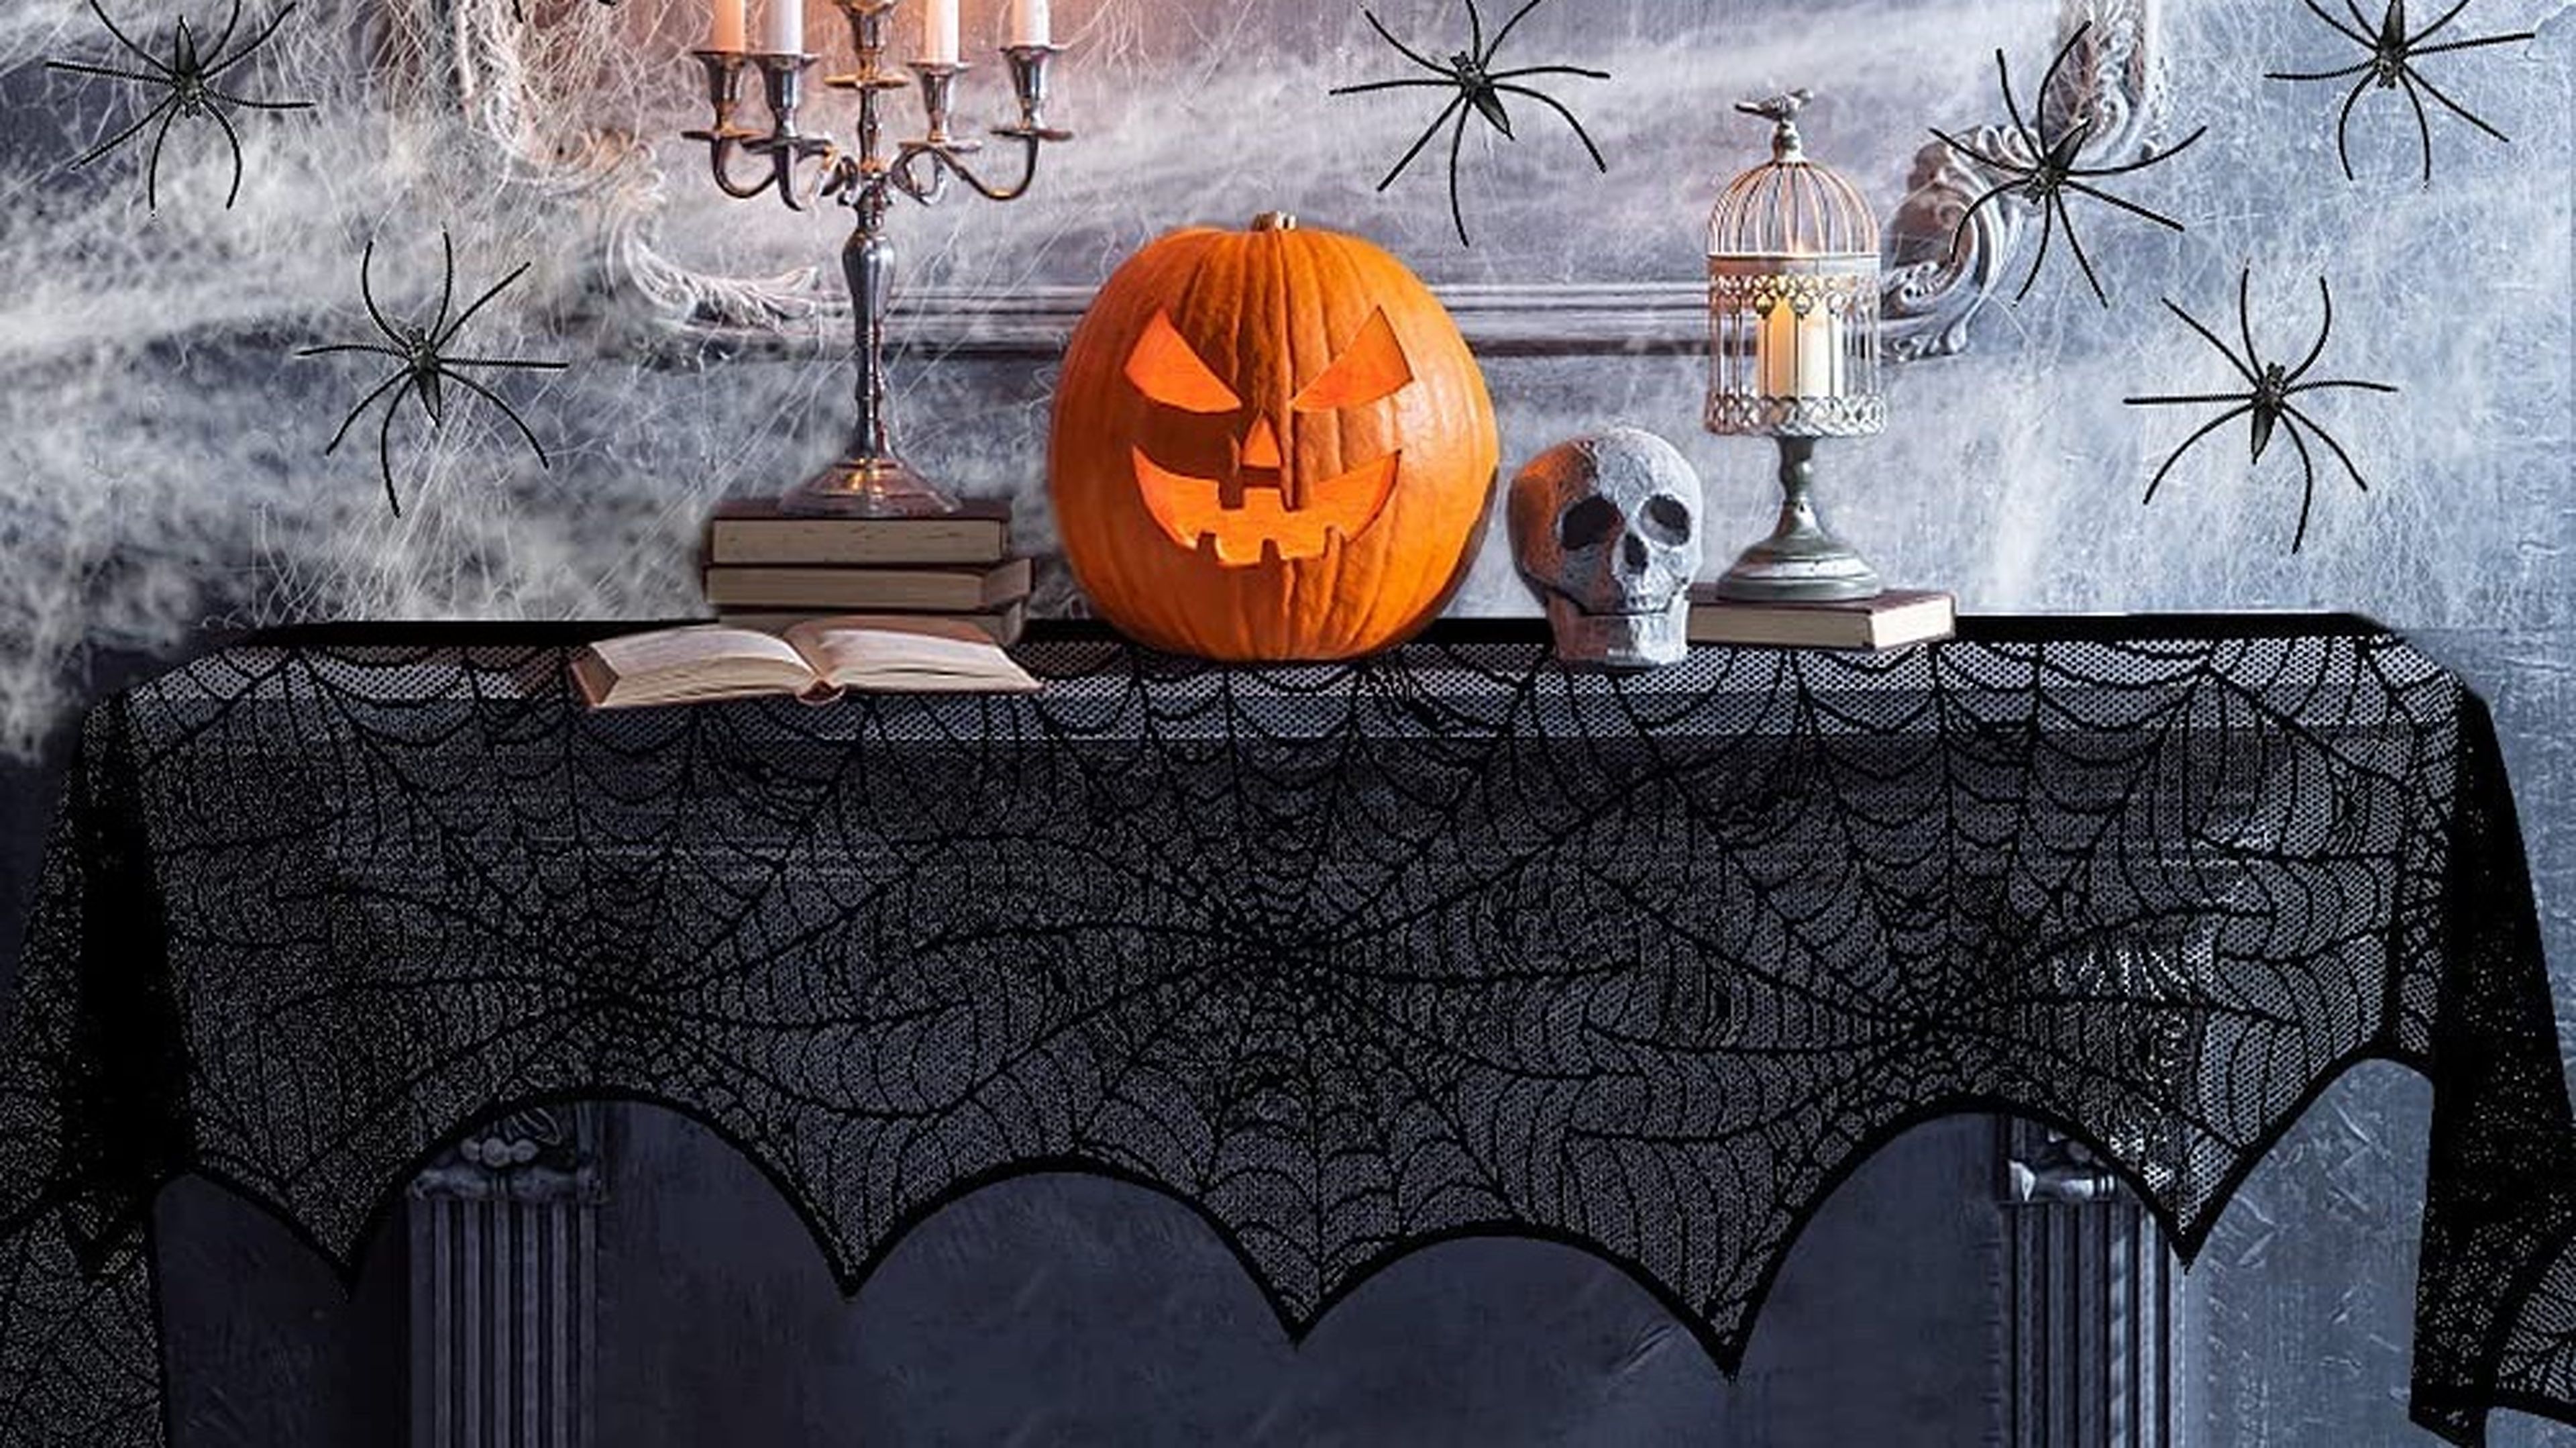 Telaraña y arañas de decoración Halloween